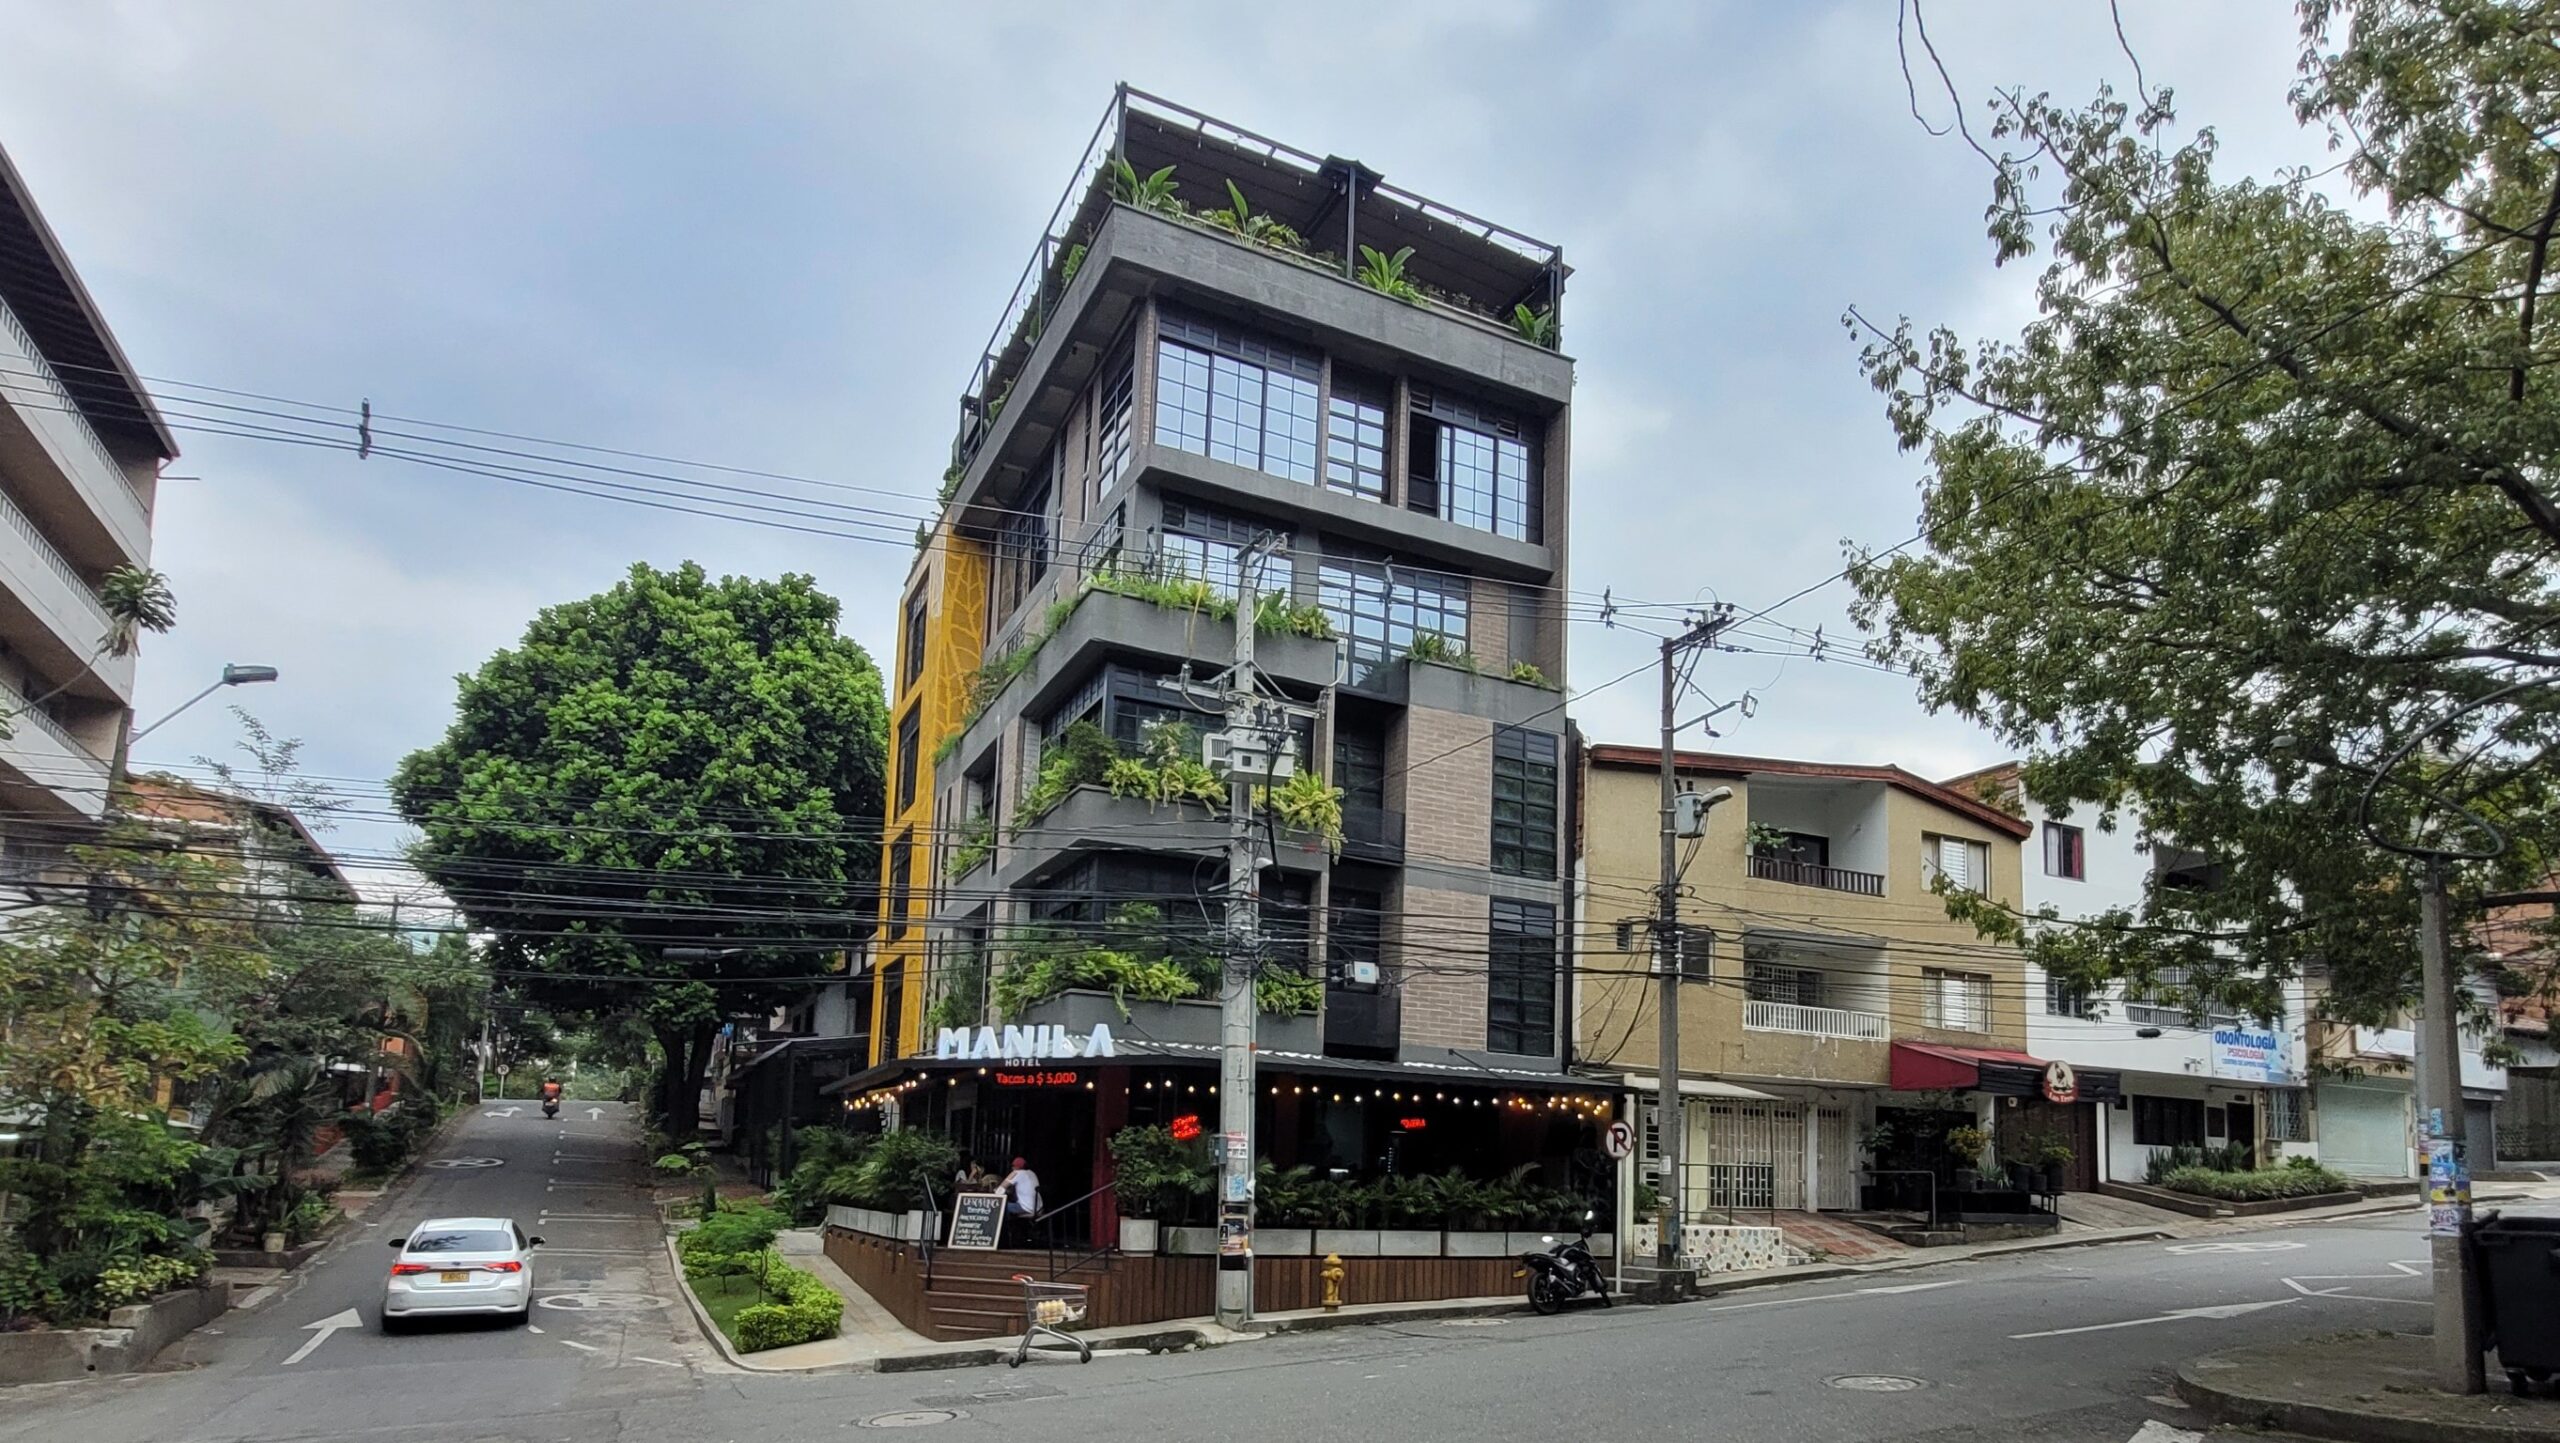 Manila Hotel Boutique Review – A Small Hotel in the Middle of El Poblado